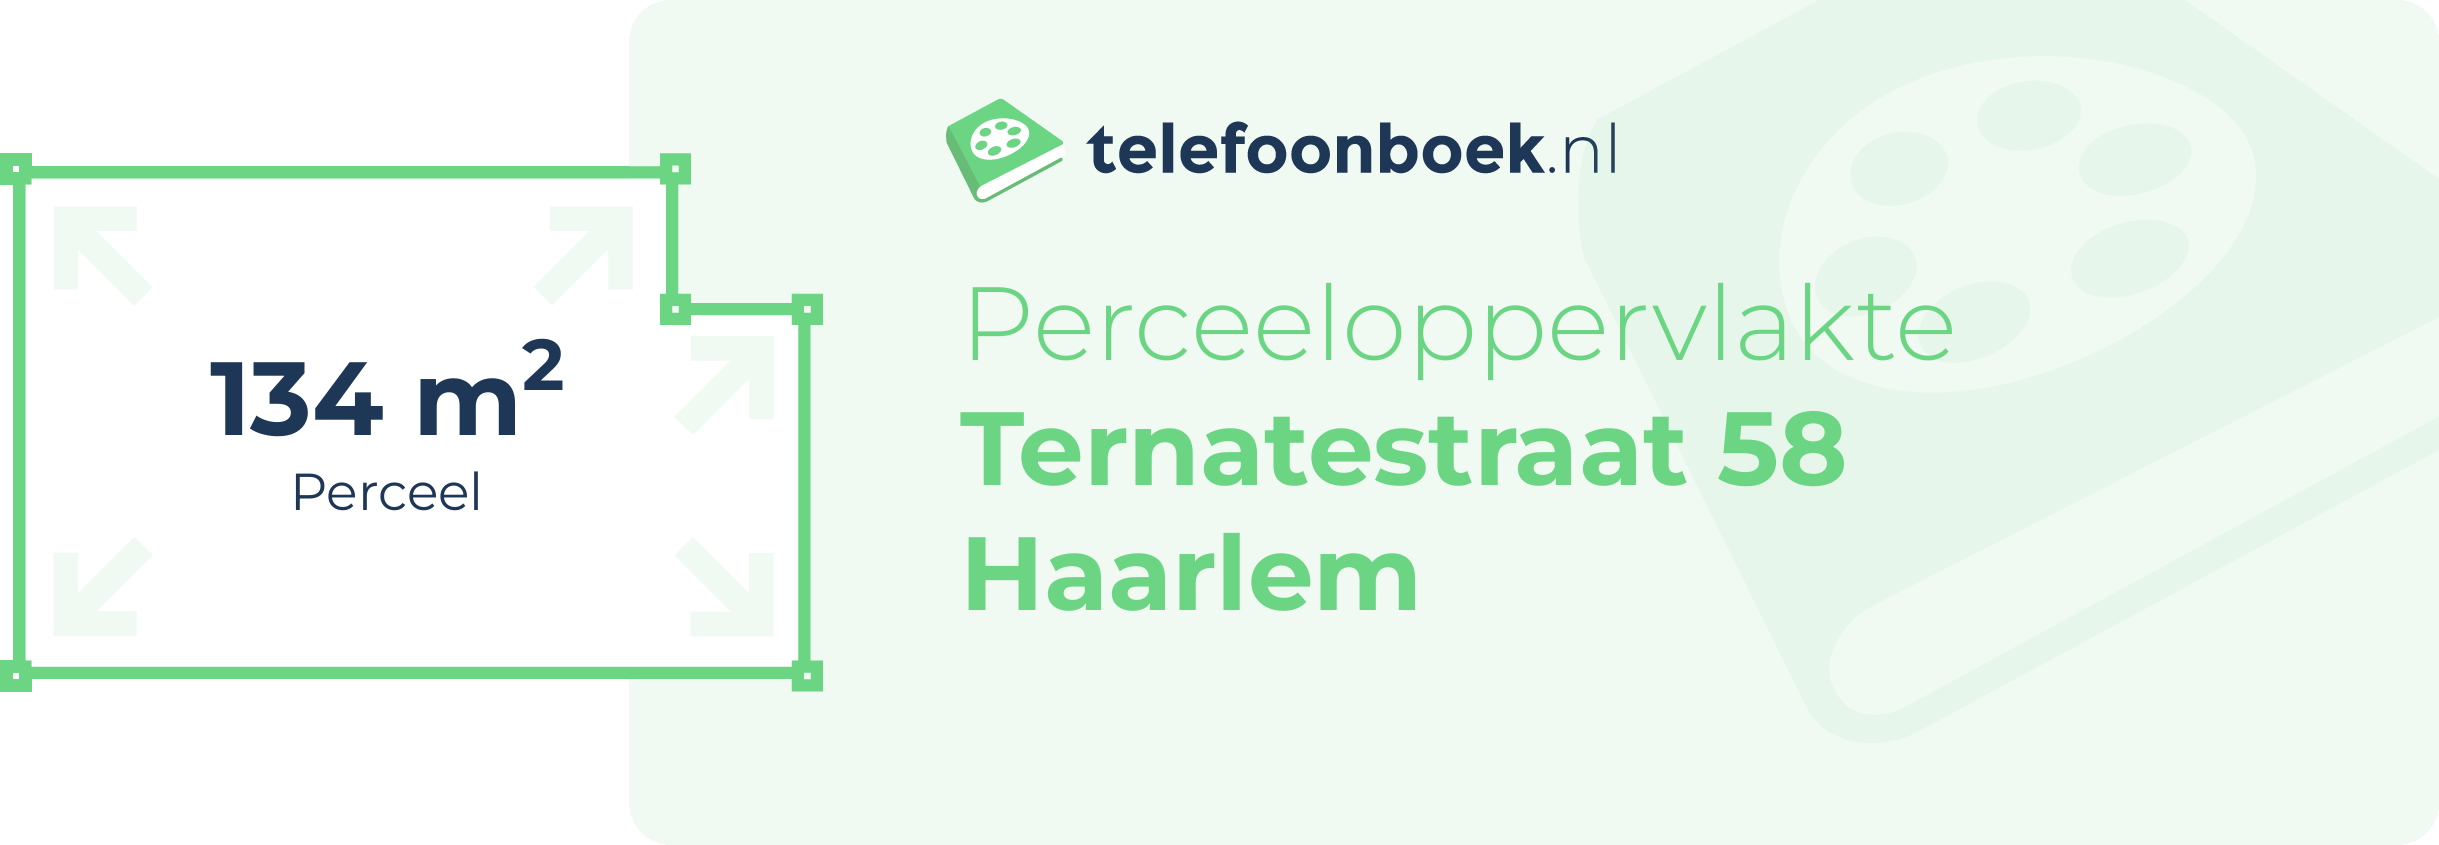 Perceeloppervlakte Ternatestraat 58 Haarlem